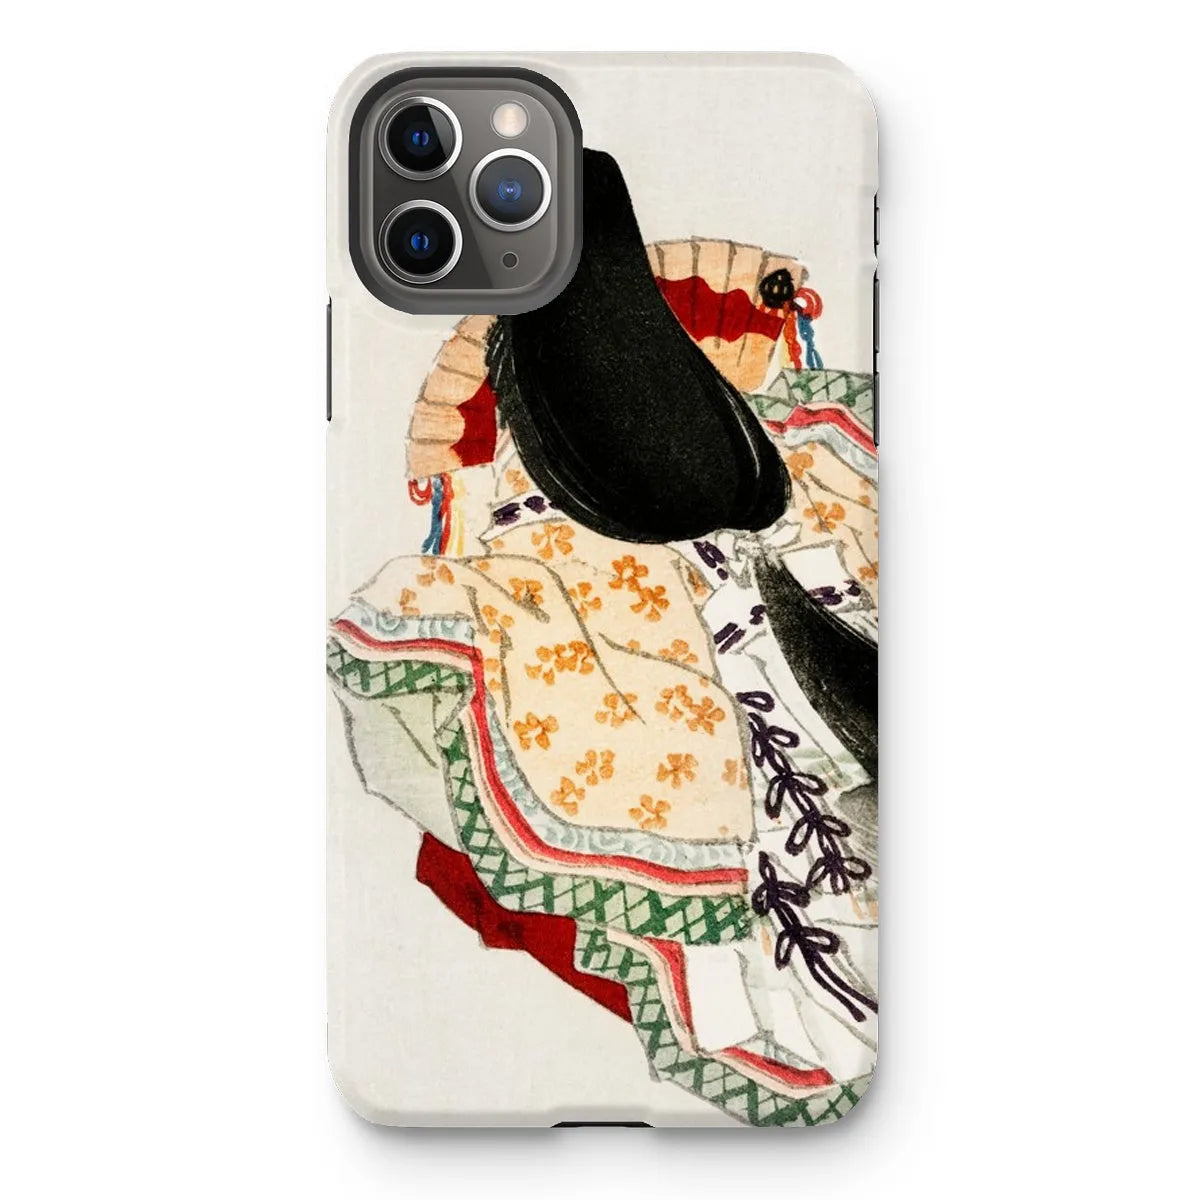 Lady In a Kimono - Meiji Art Phone Case - Kōno Bairei - Iphone 11 Pro Max / Matte - Mobile Phone Cases - Aesthetic Art